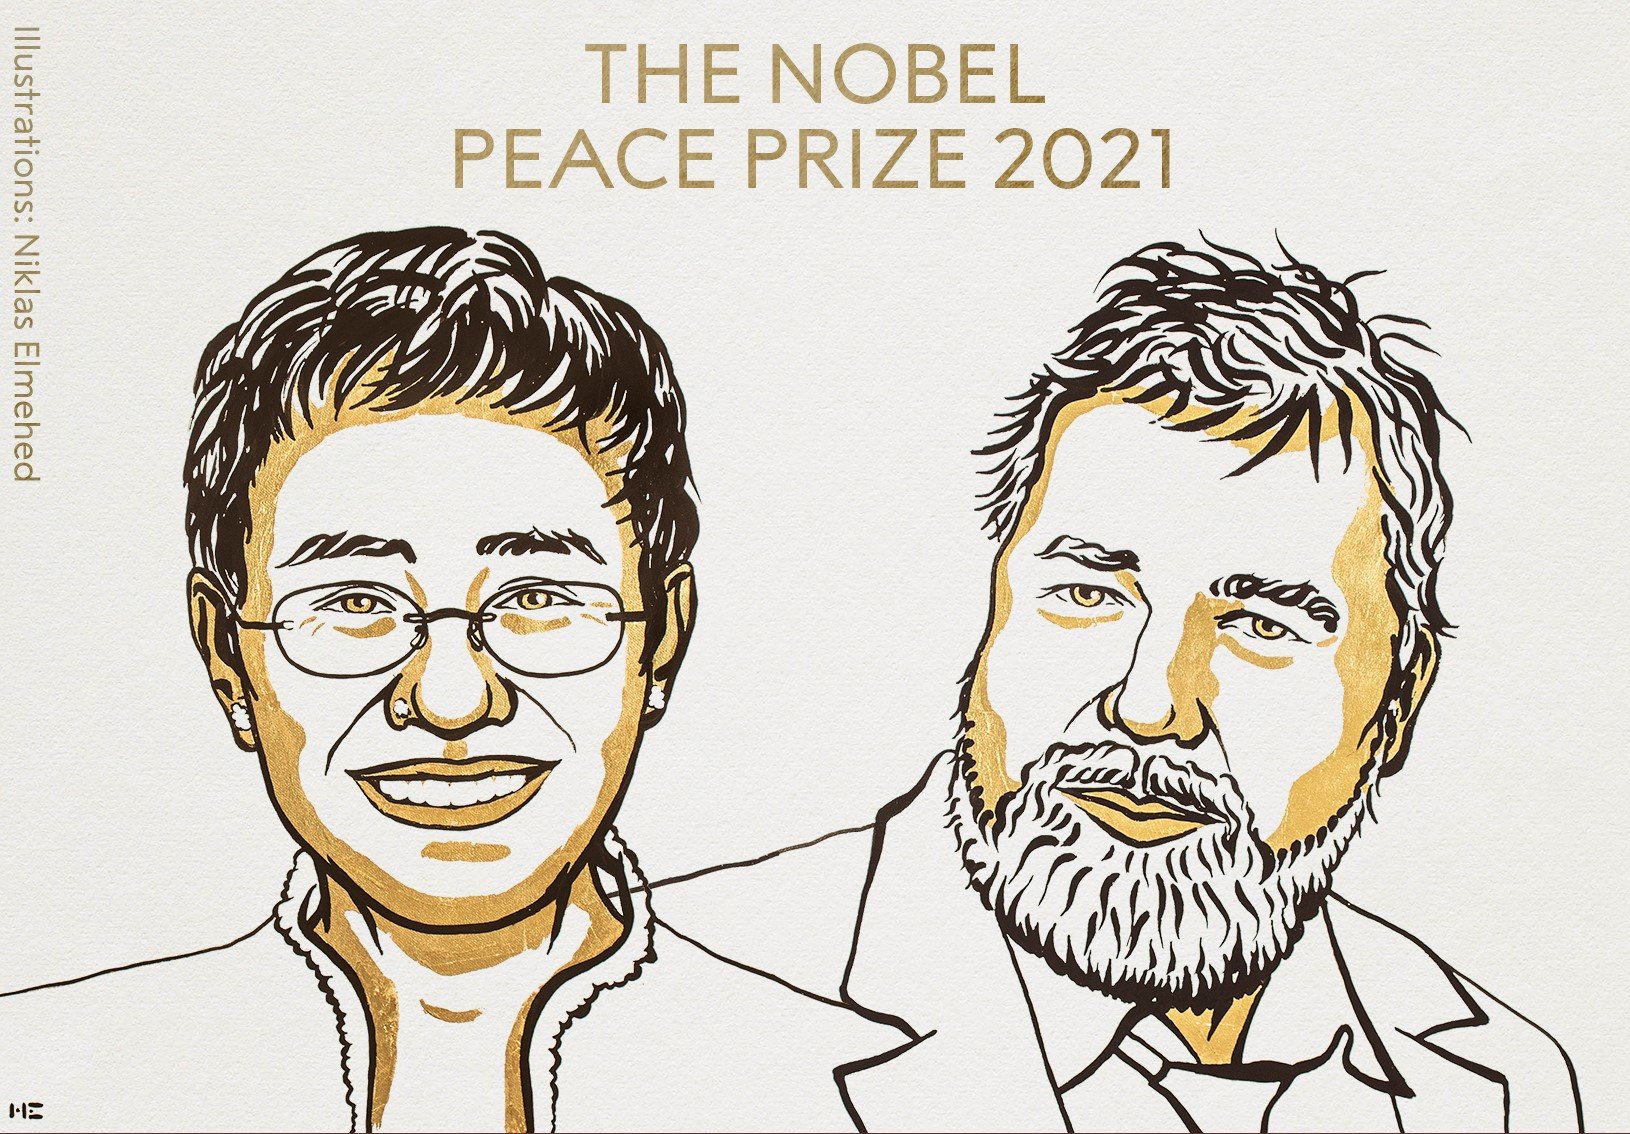 Els periodistes María Ressa i Dmitry Muratov, premis Nobel de la Pau